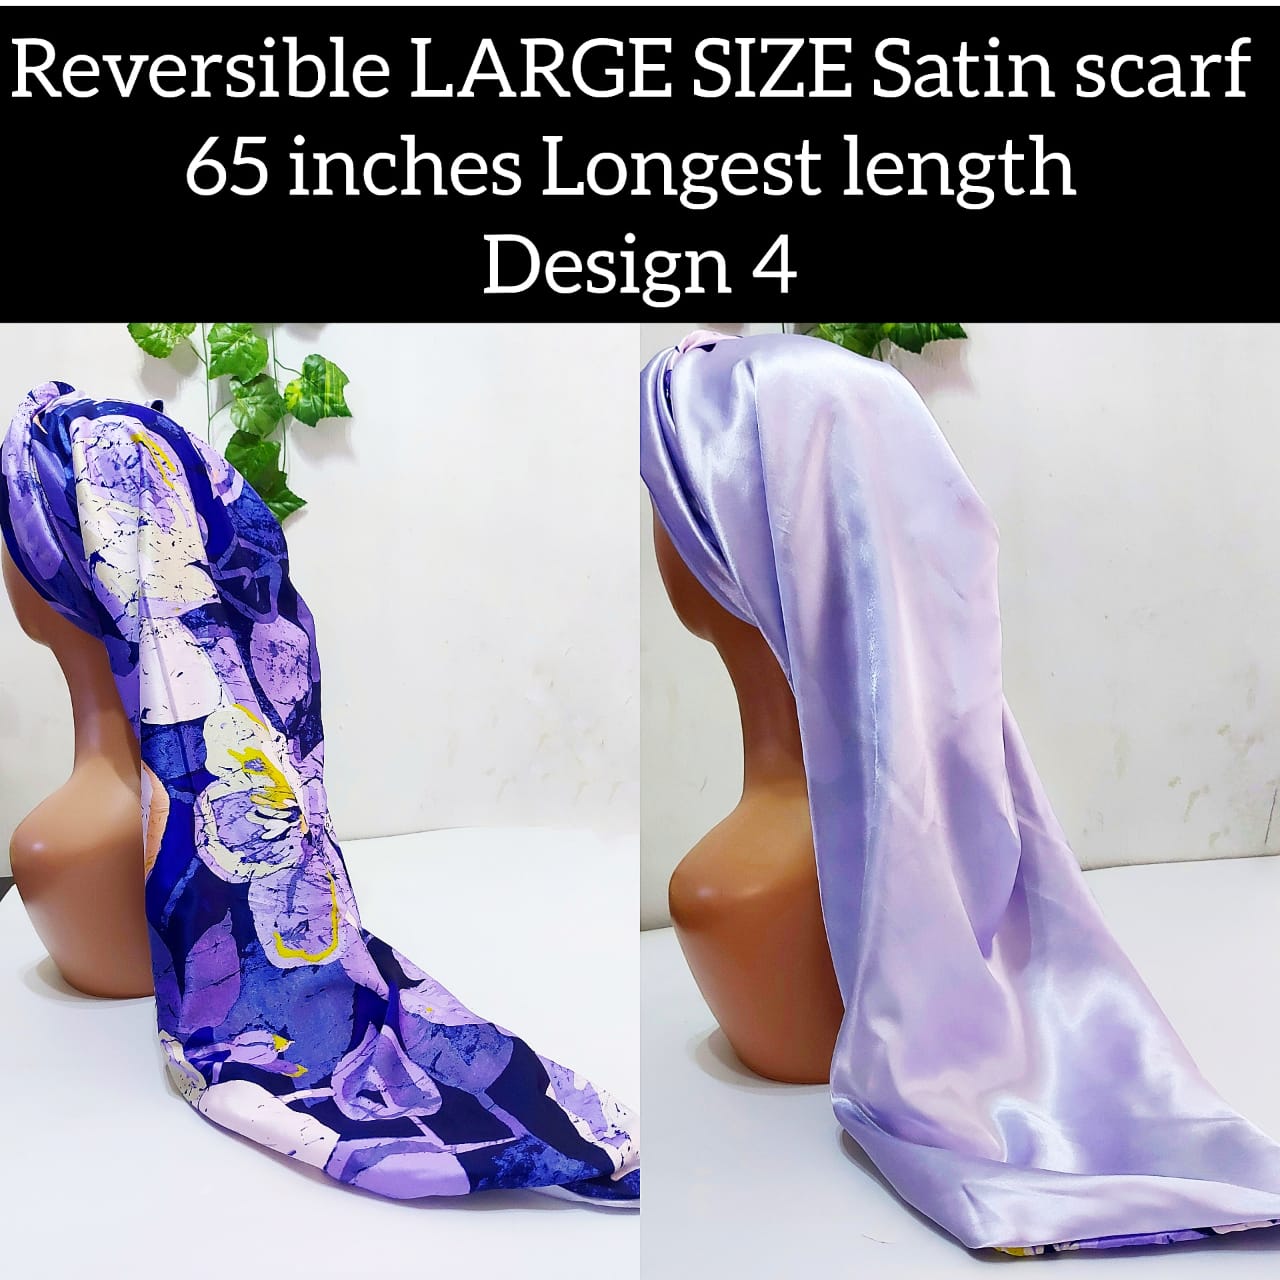 Reversible LARGE SIZE Satin scarf Design 4